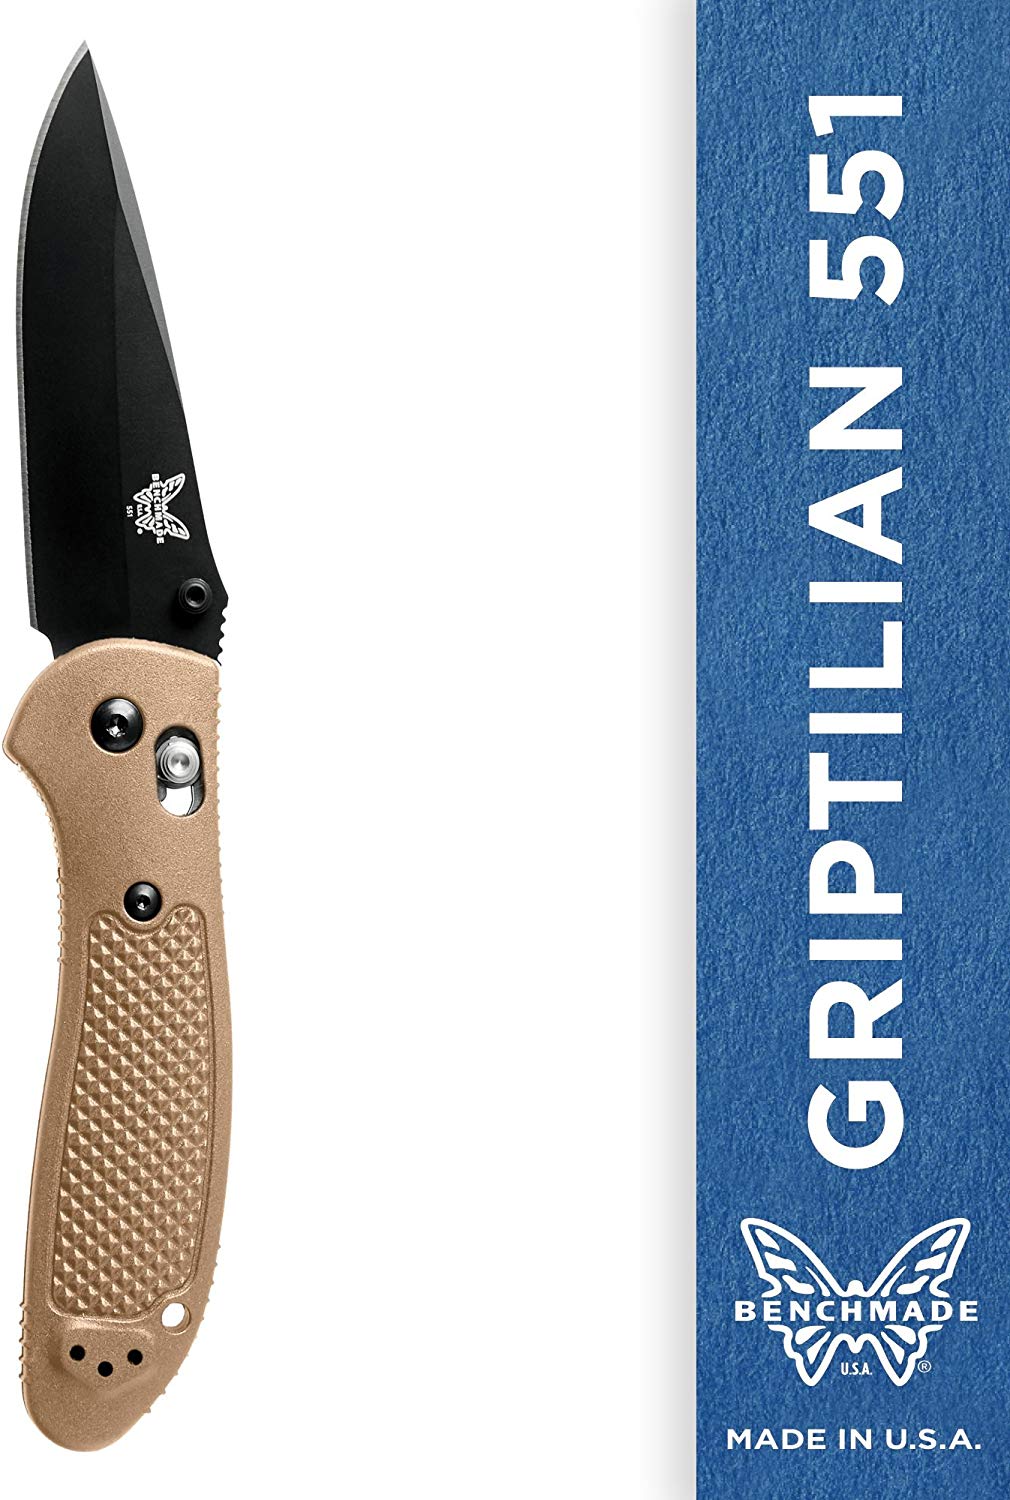 Benchmade - Griptilian 551 Knife - Drop-Point Blade - Serrated Edge - Coated Finish - Sand Handle